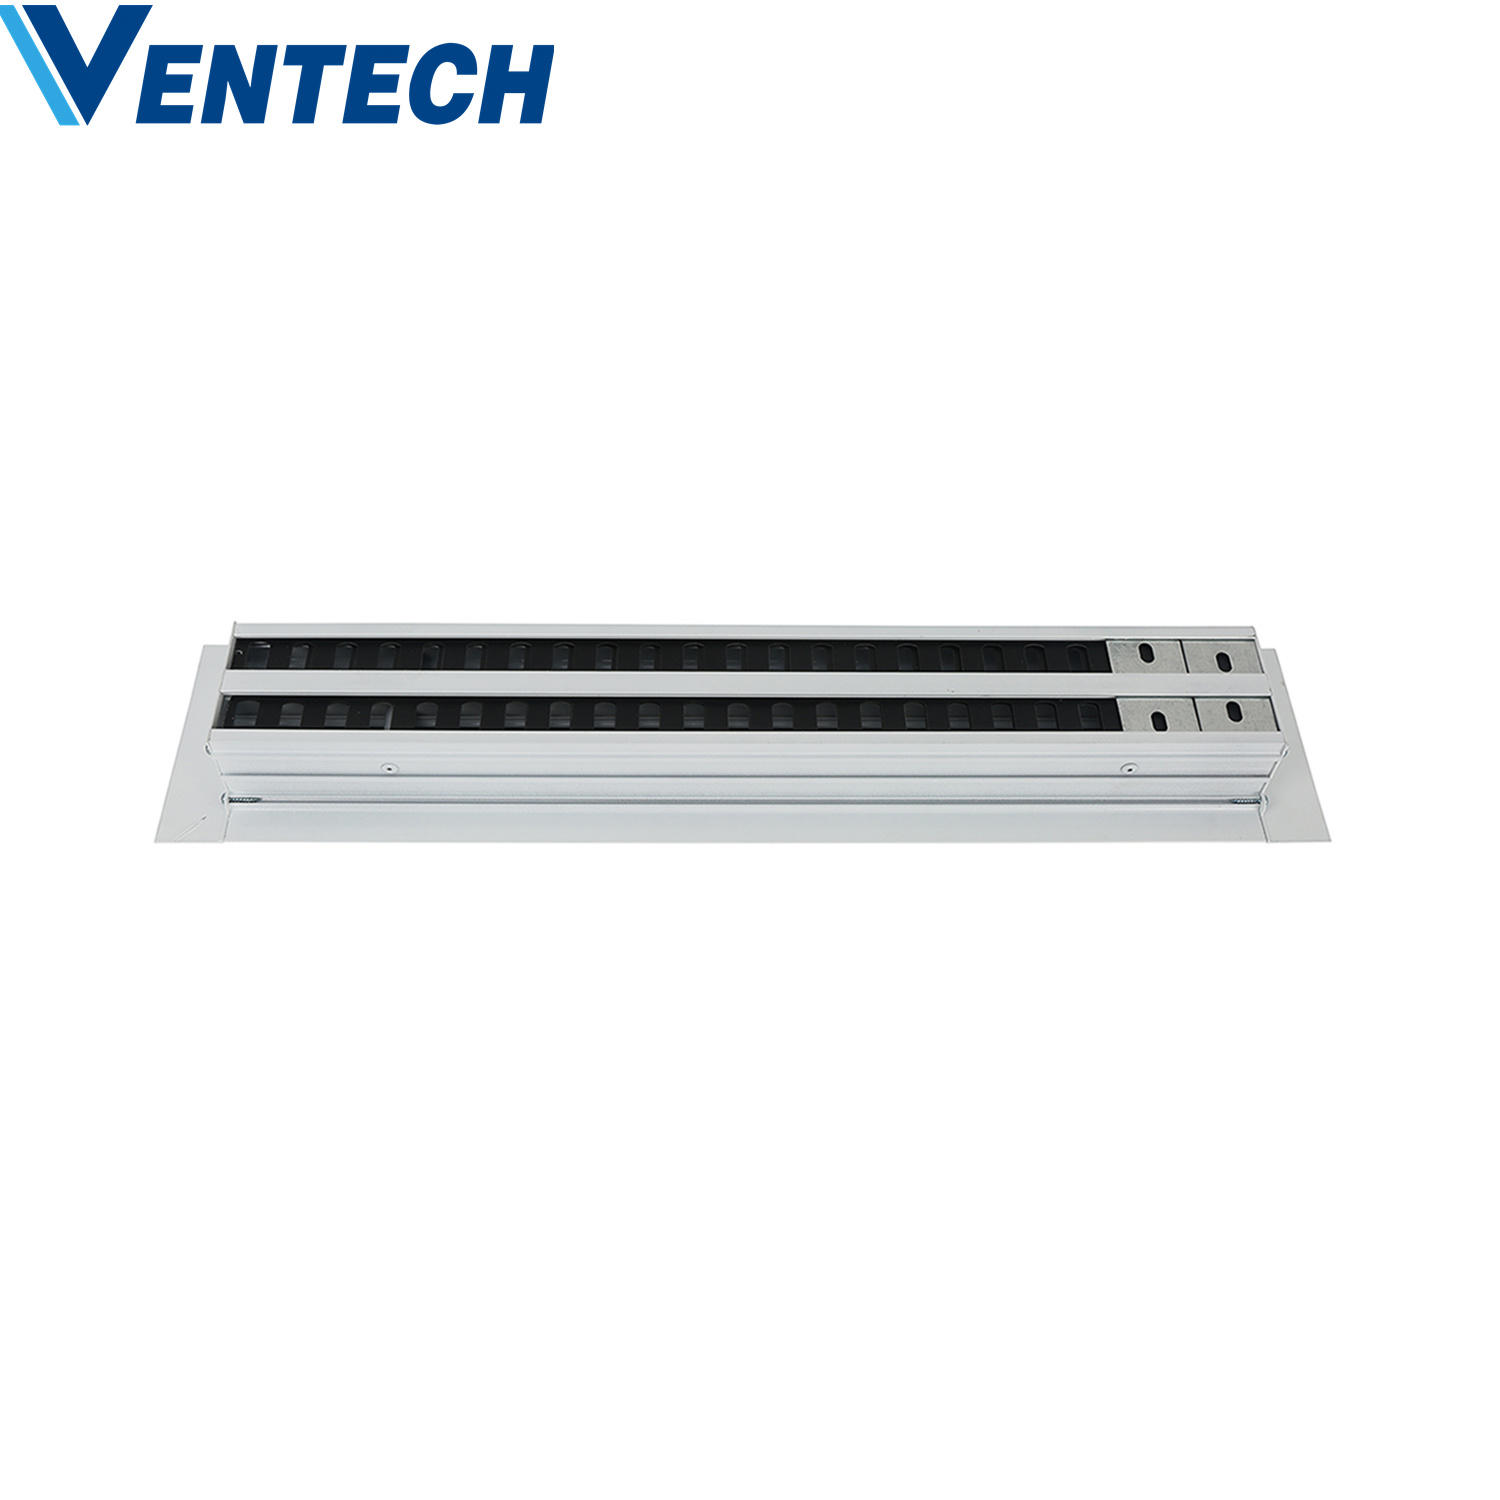 Hvac Exhaust Supply Air Ceiling Ventilation Duct Conditioning Aluminum Linear Slot VAV Diffuser Plenum Box